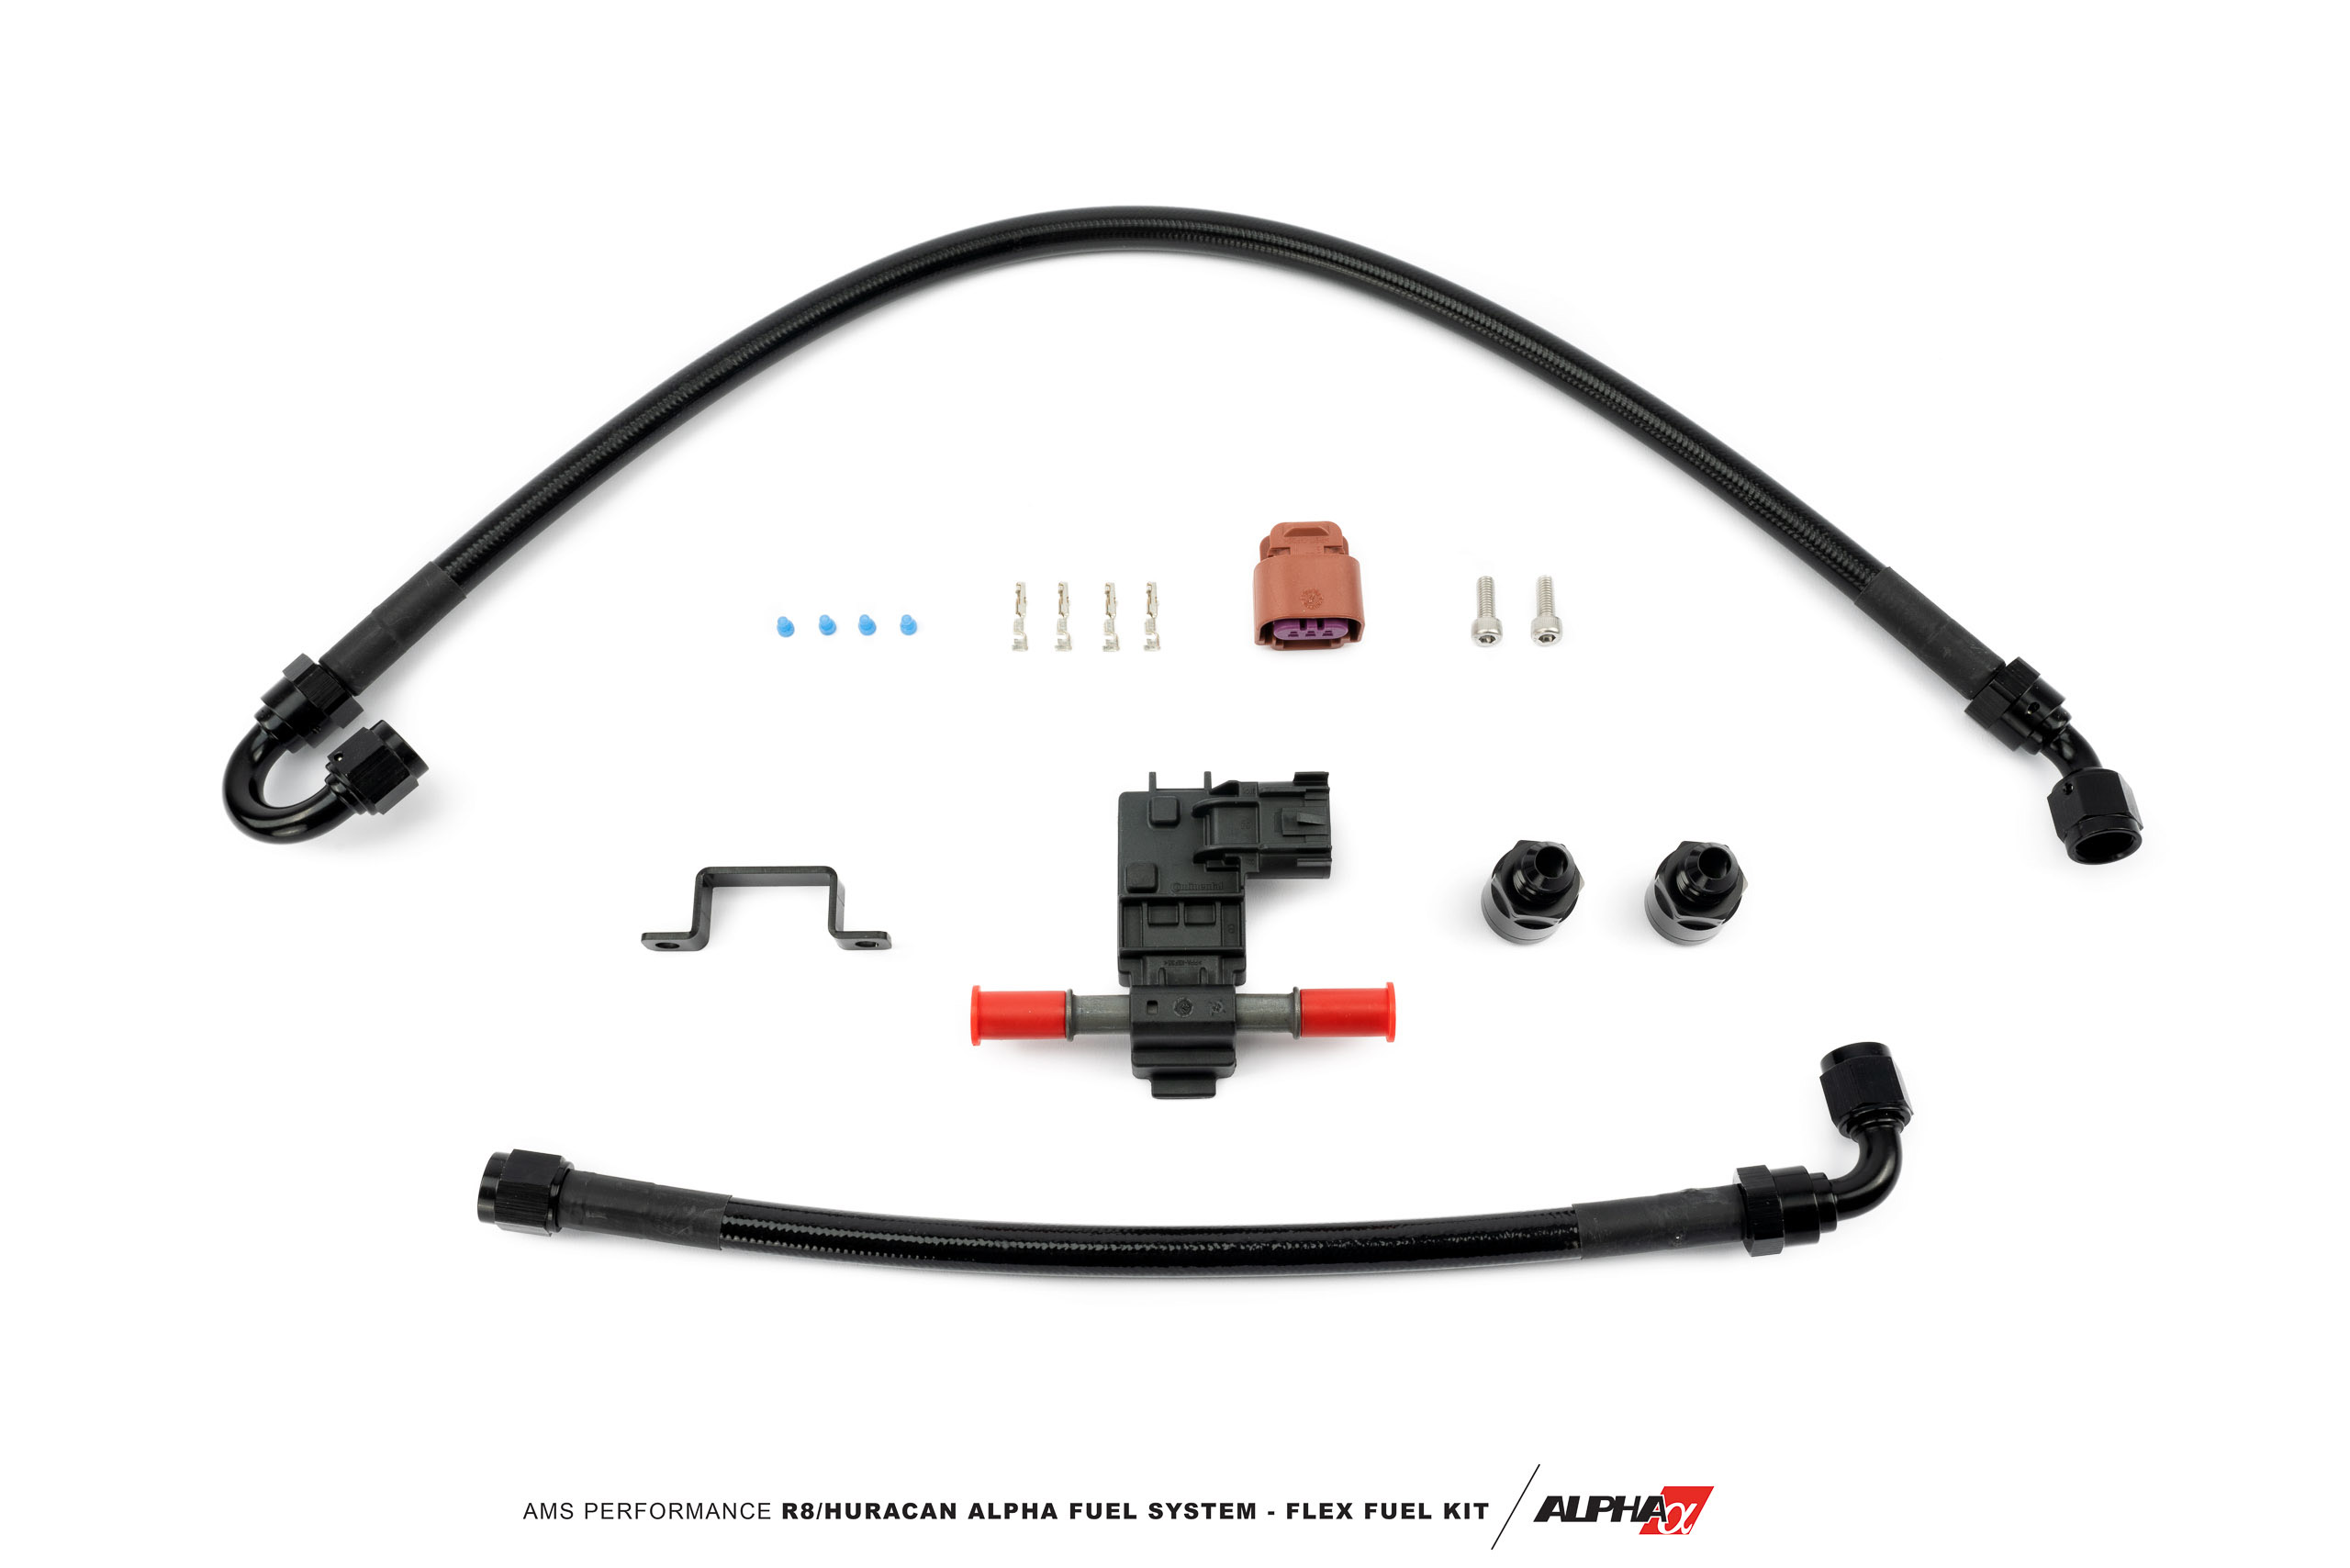 AMS Performance R8/Huracan Alpha Fuel System - Flex Fuel Kit